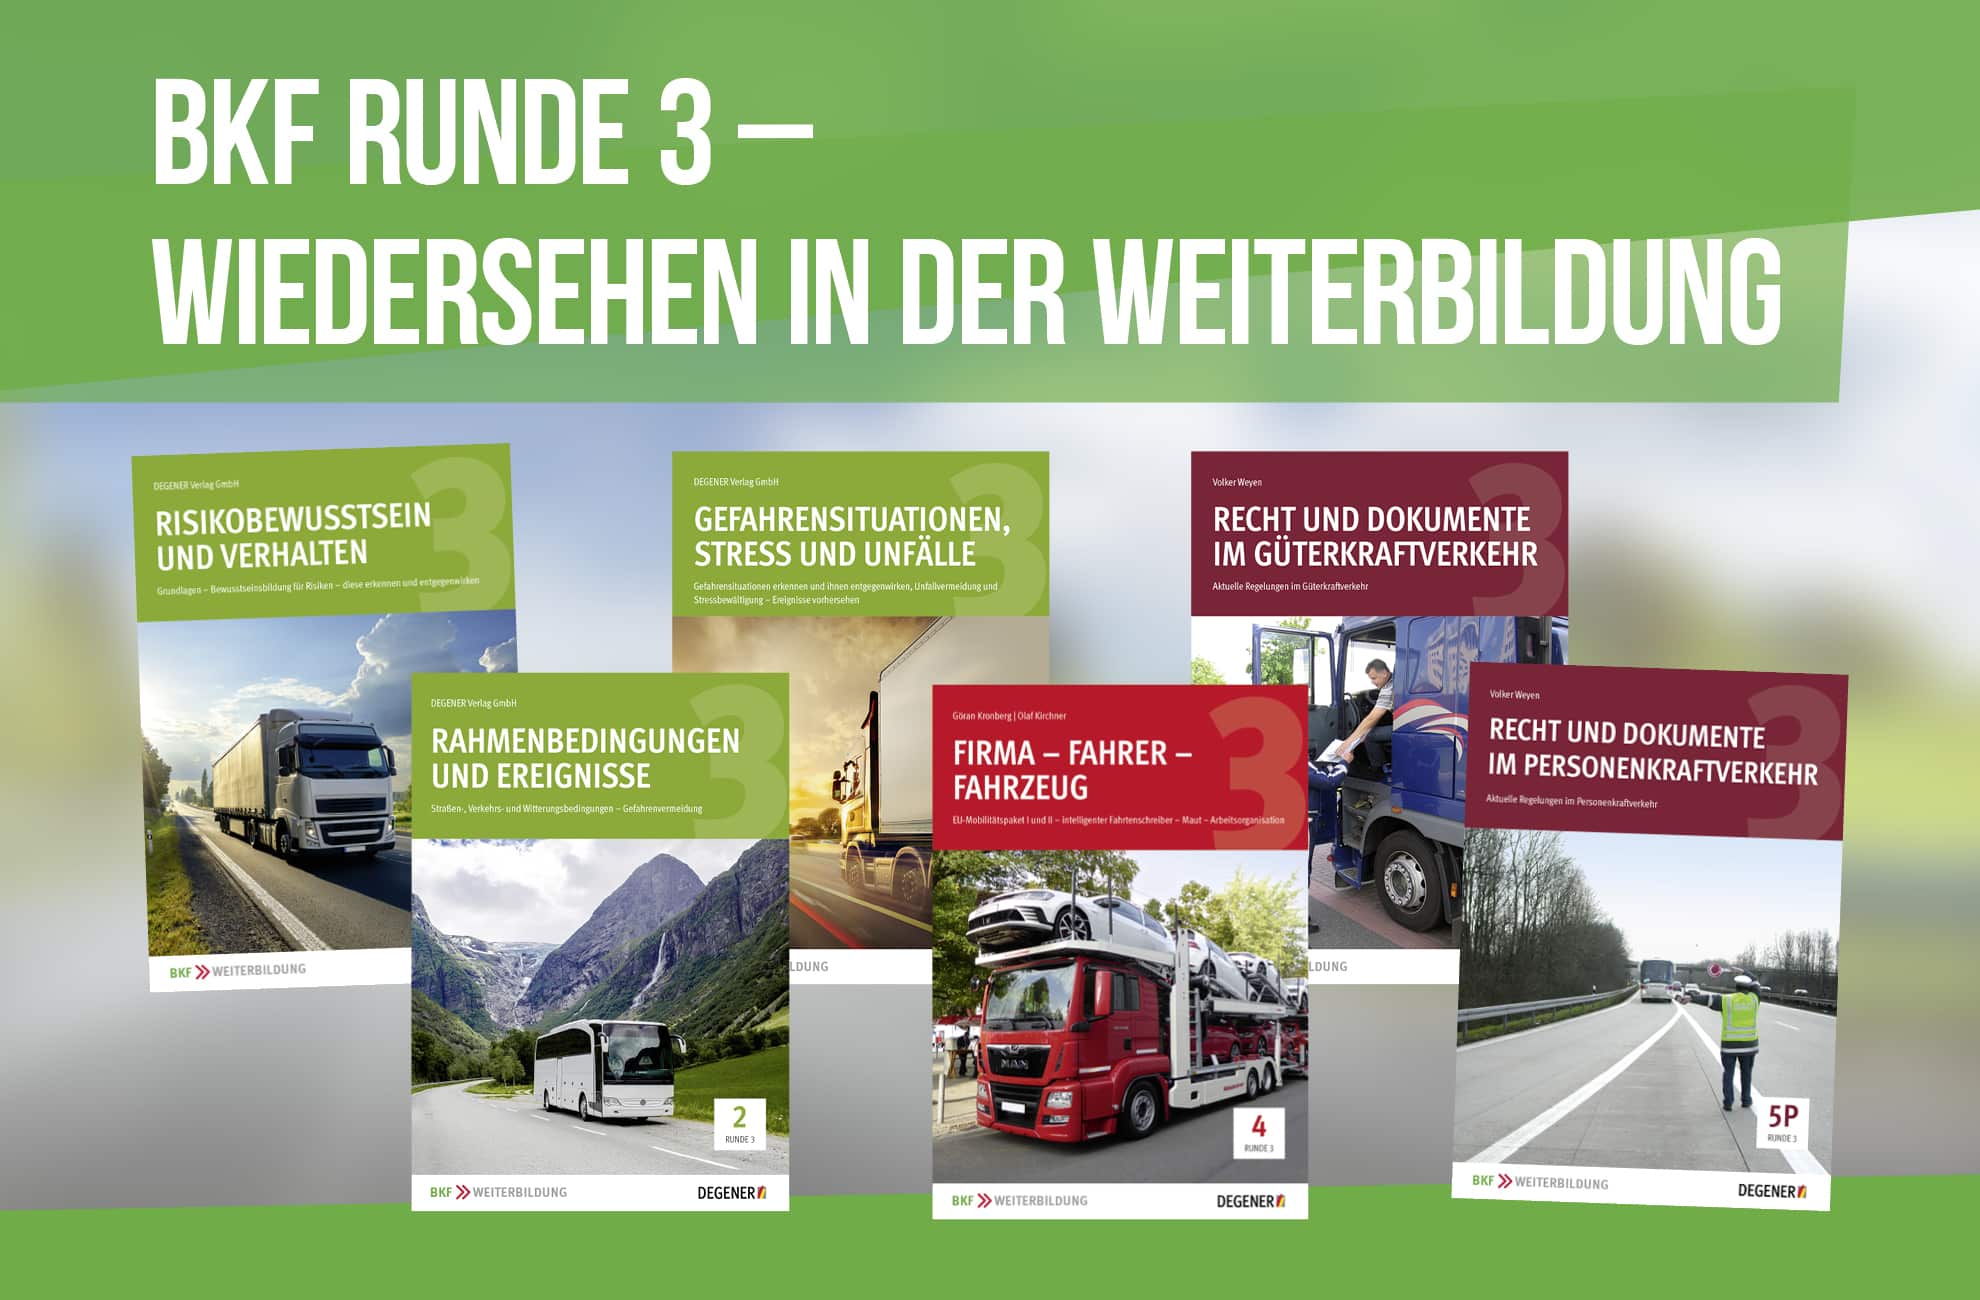 DEGENER Verlag - Ihr Fachverlag für Fahrschulen, Berufskraftfahrer